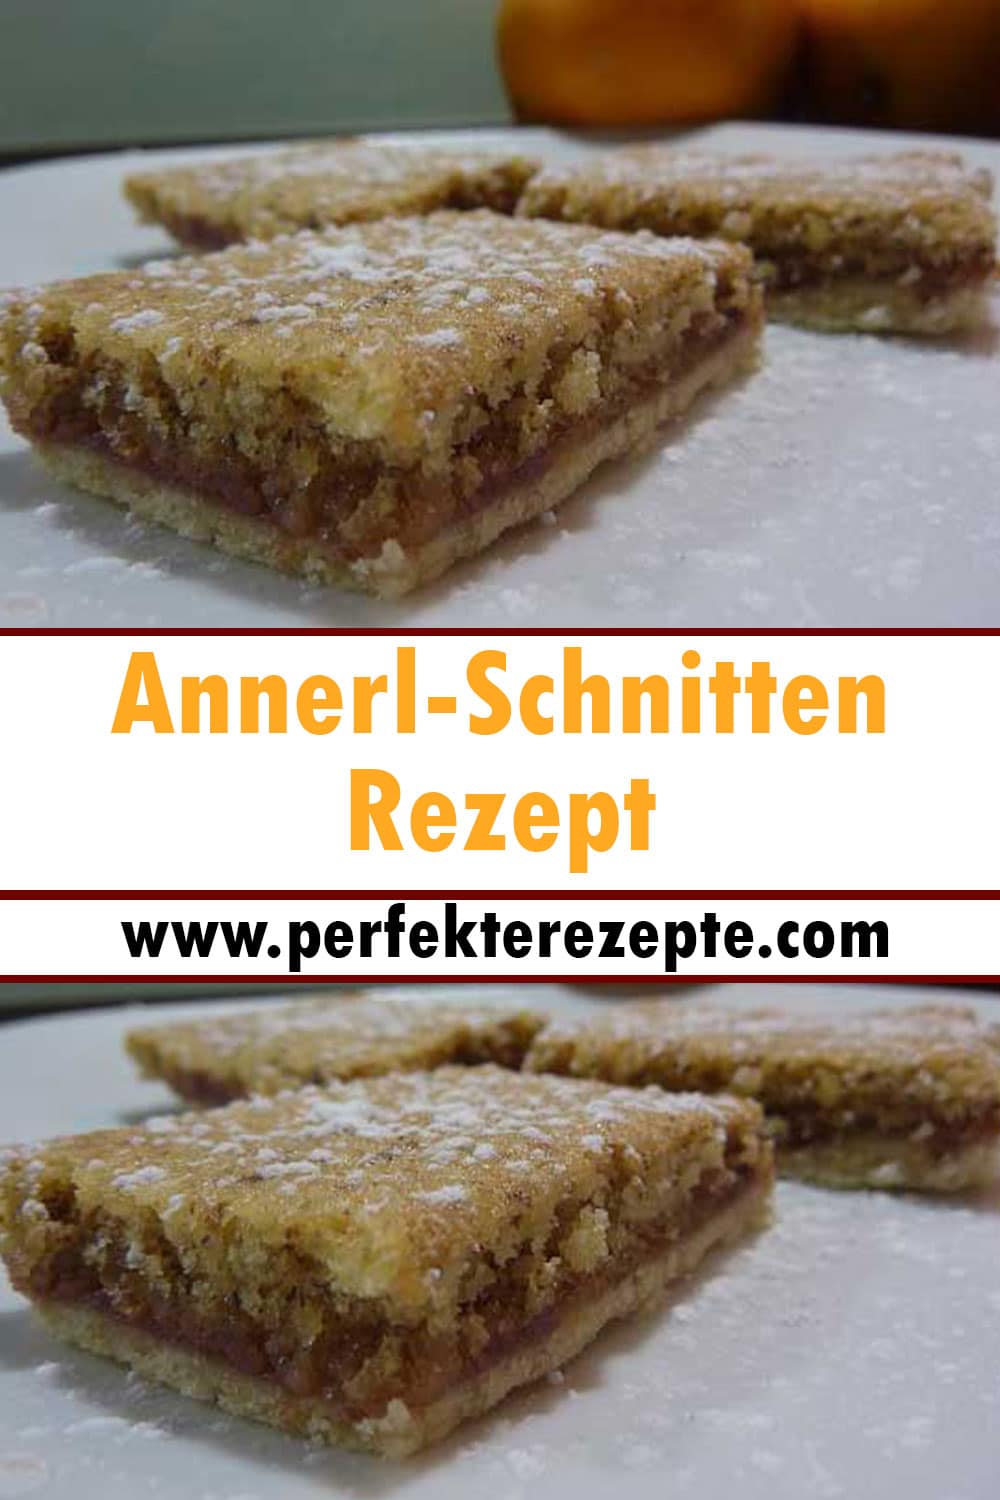 Annerl-Schnitten Rezept